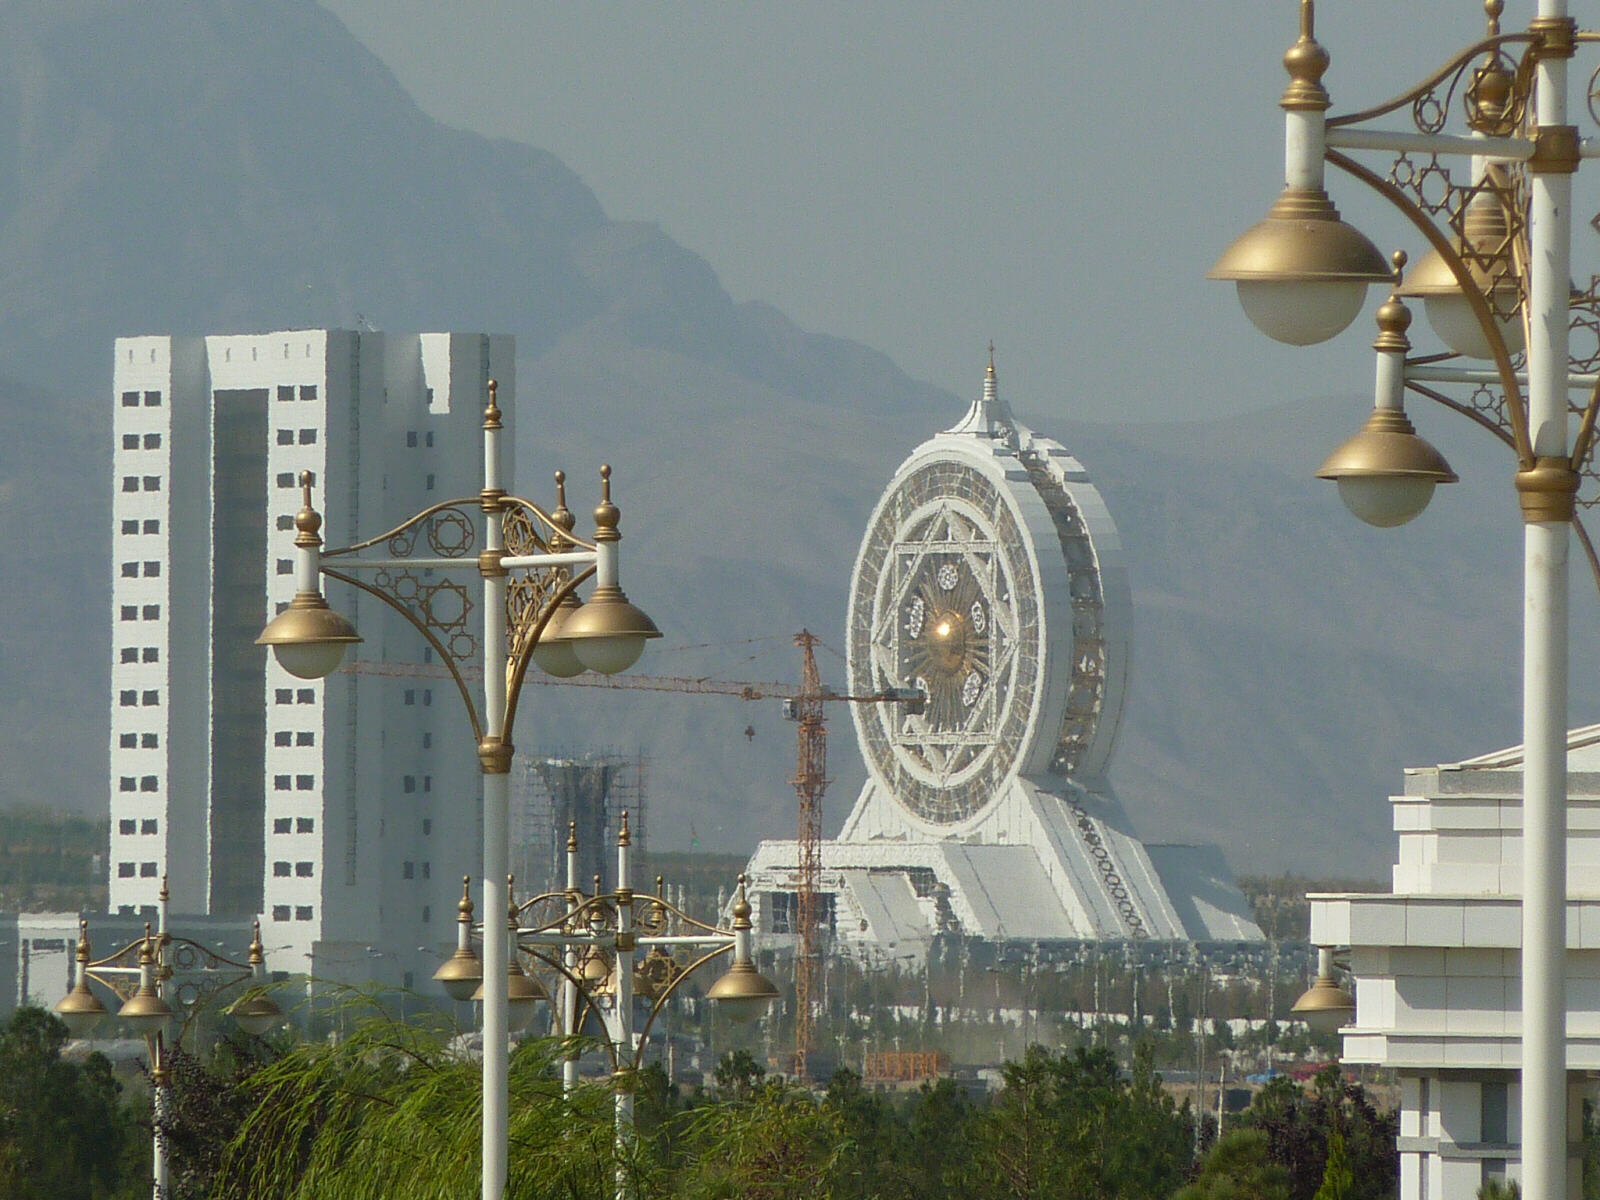 An eccentric building in Ashgabat, Turkmenistan